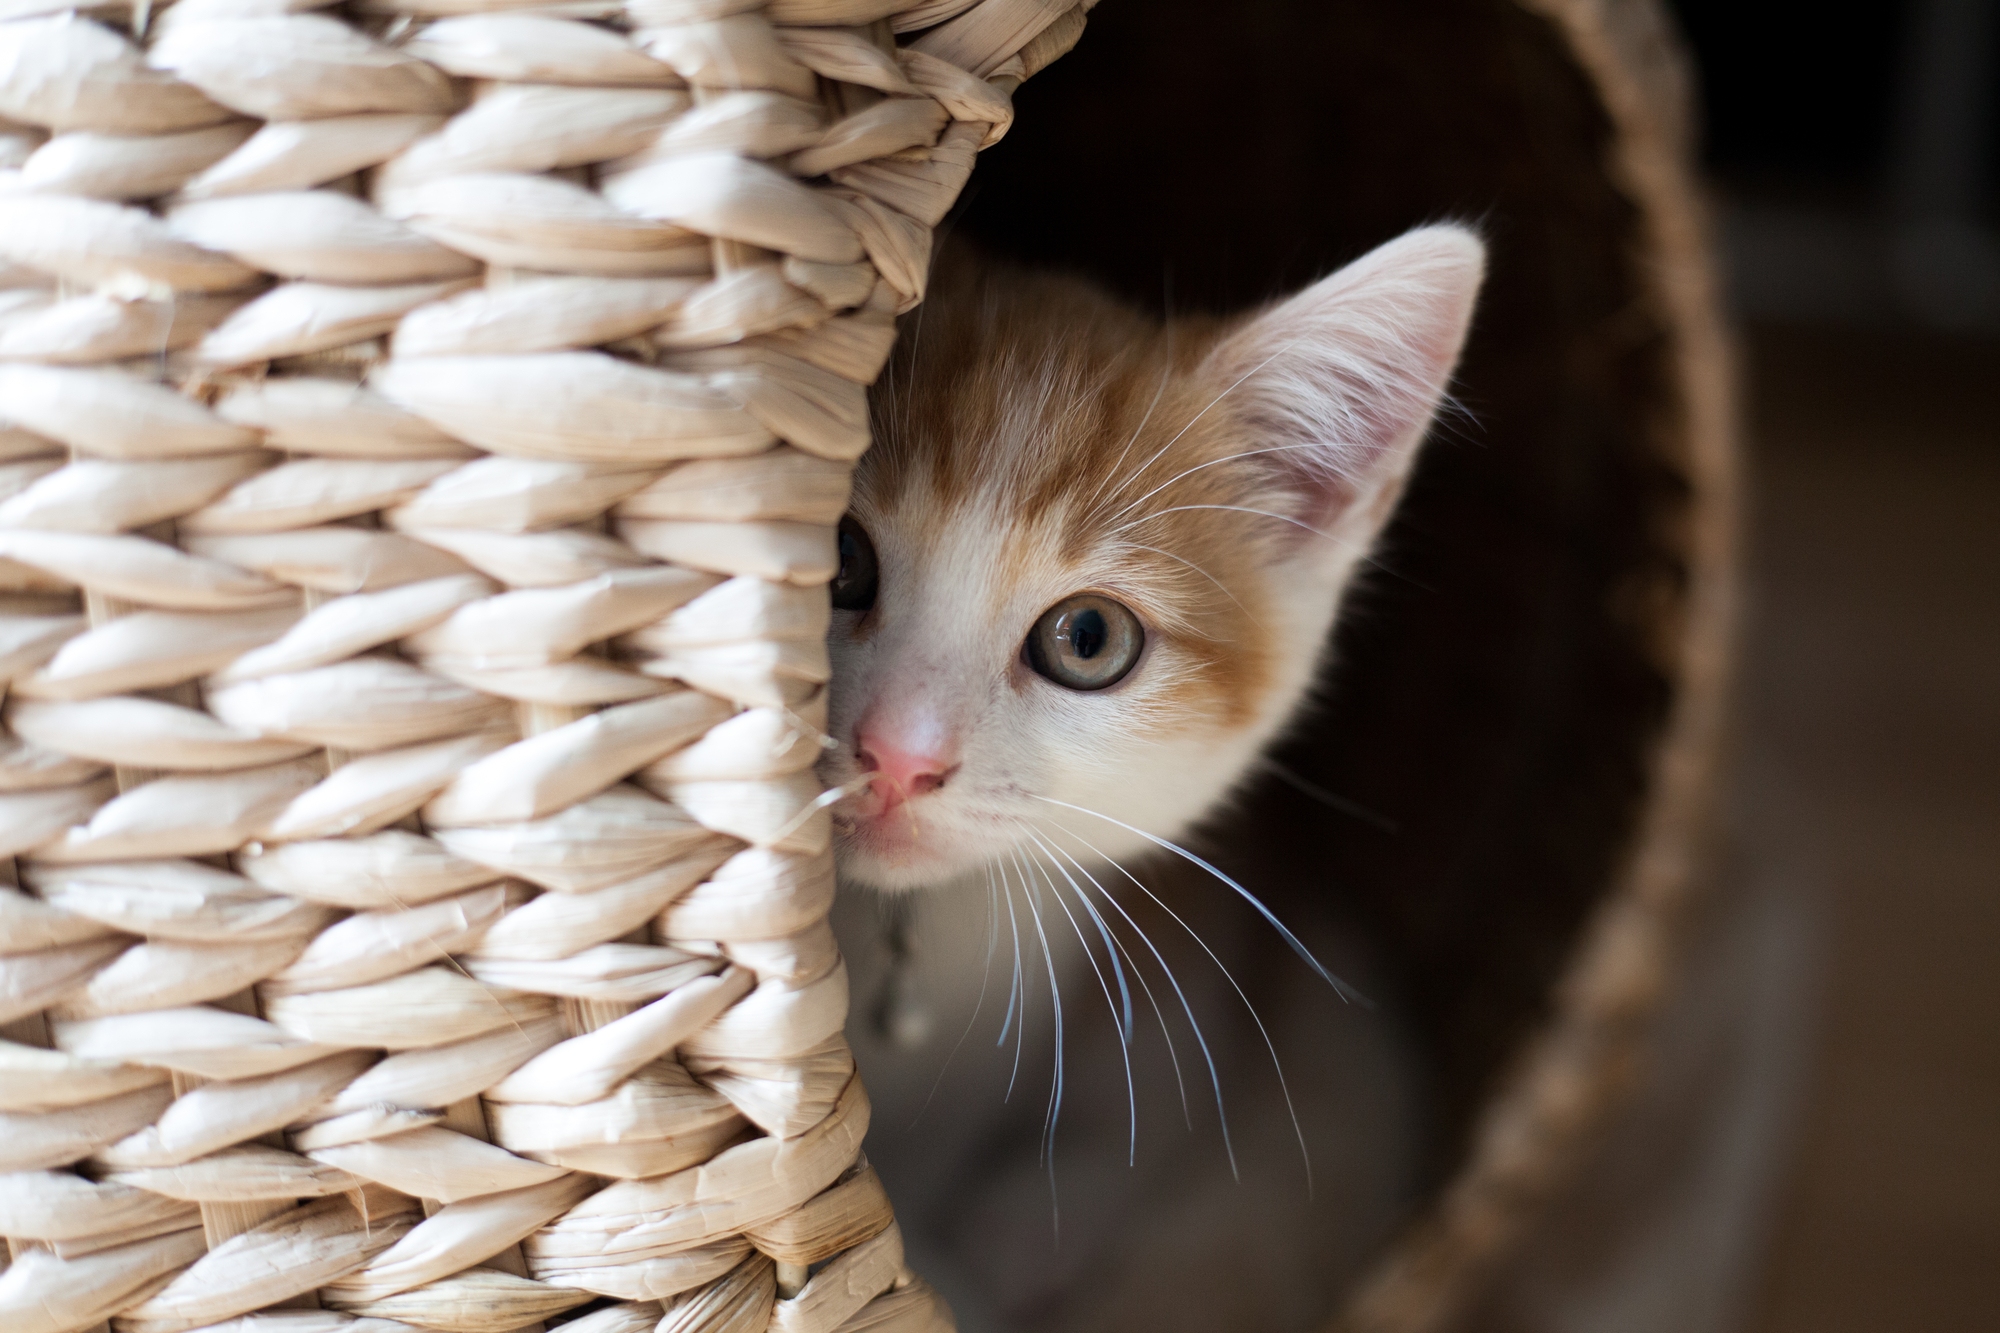 cat hiding inside the basket